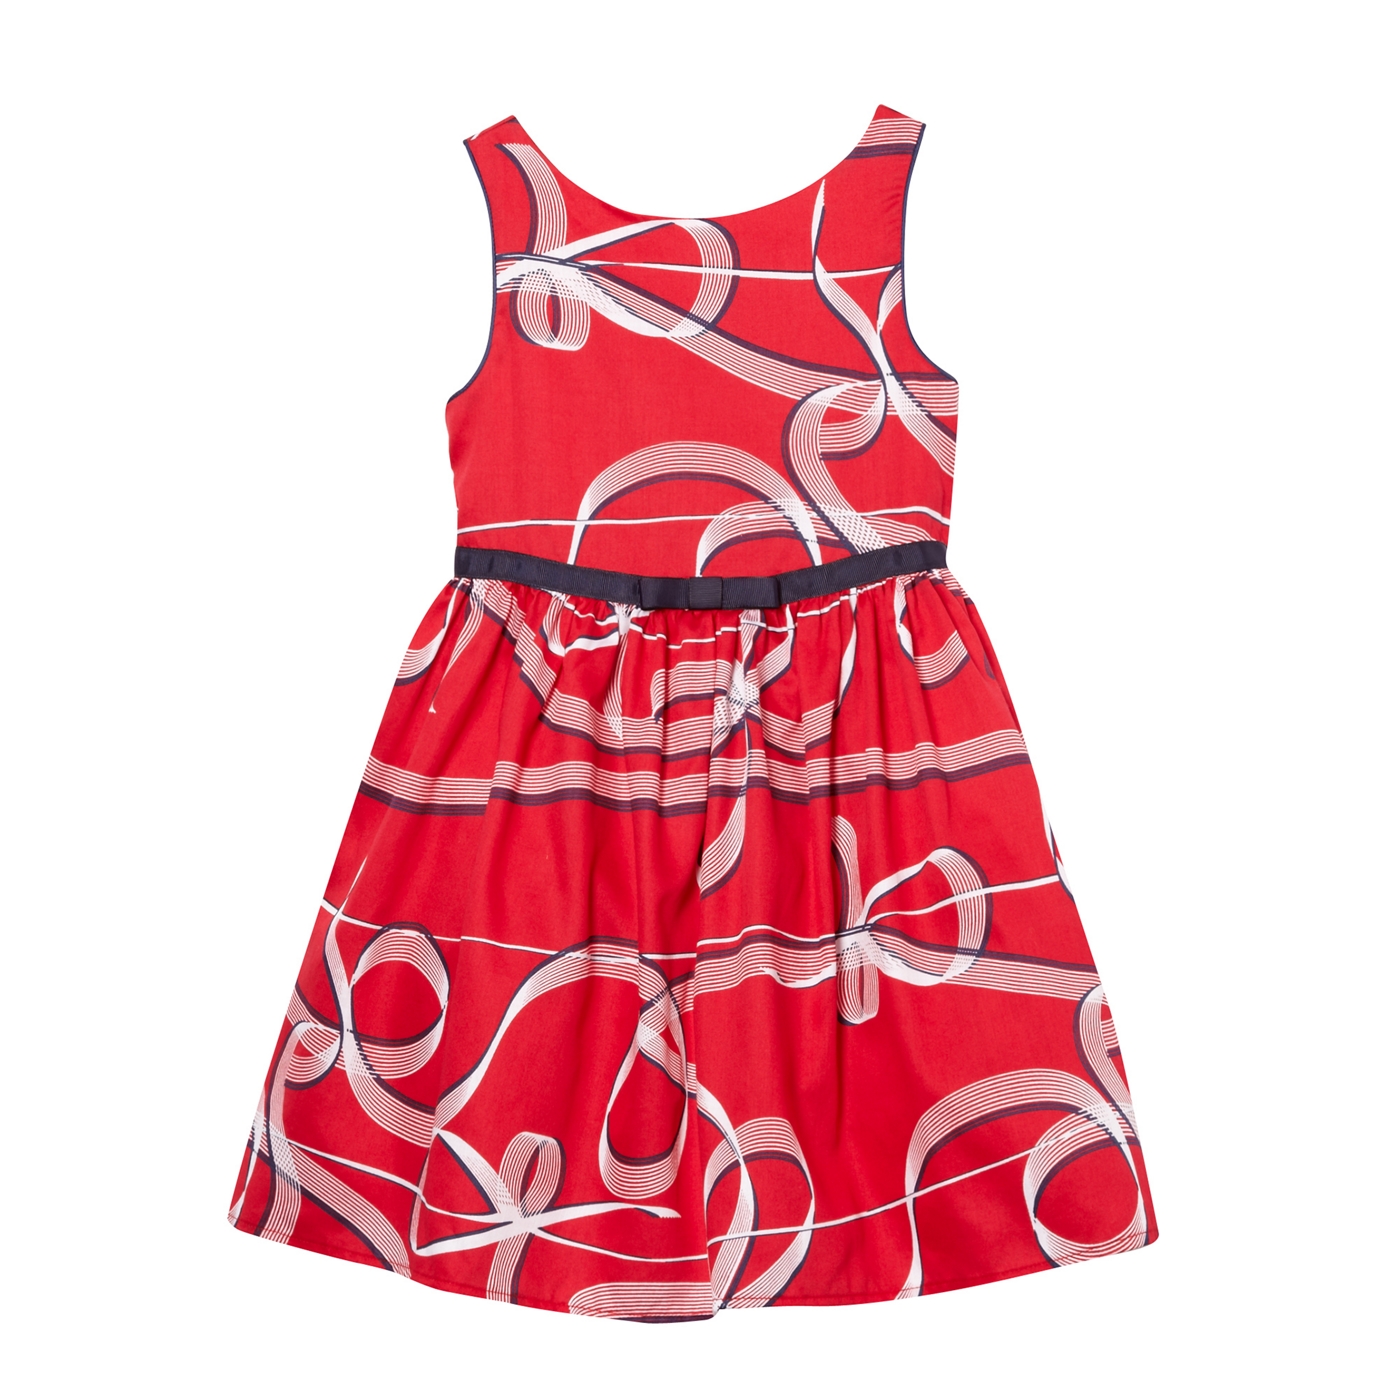 J by Jasper Conran Designer girls red ribbon pattern party dress